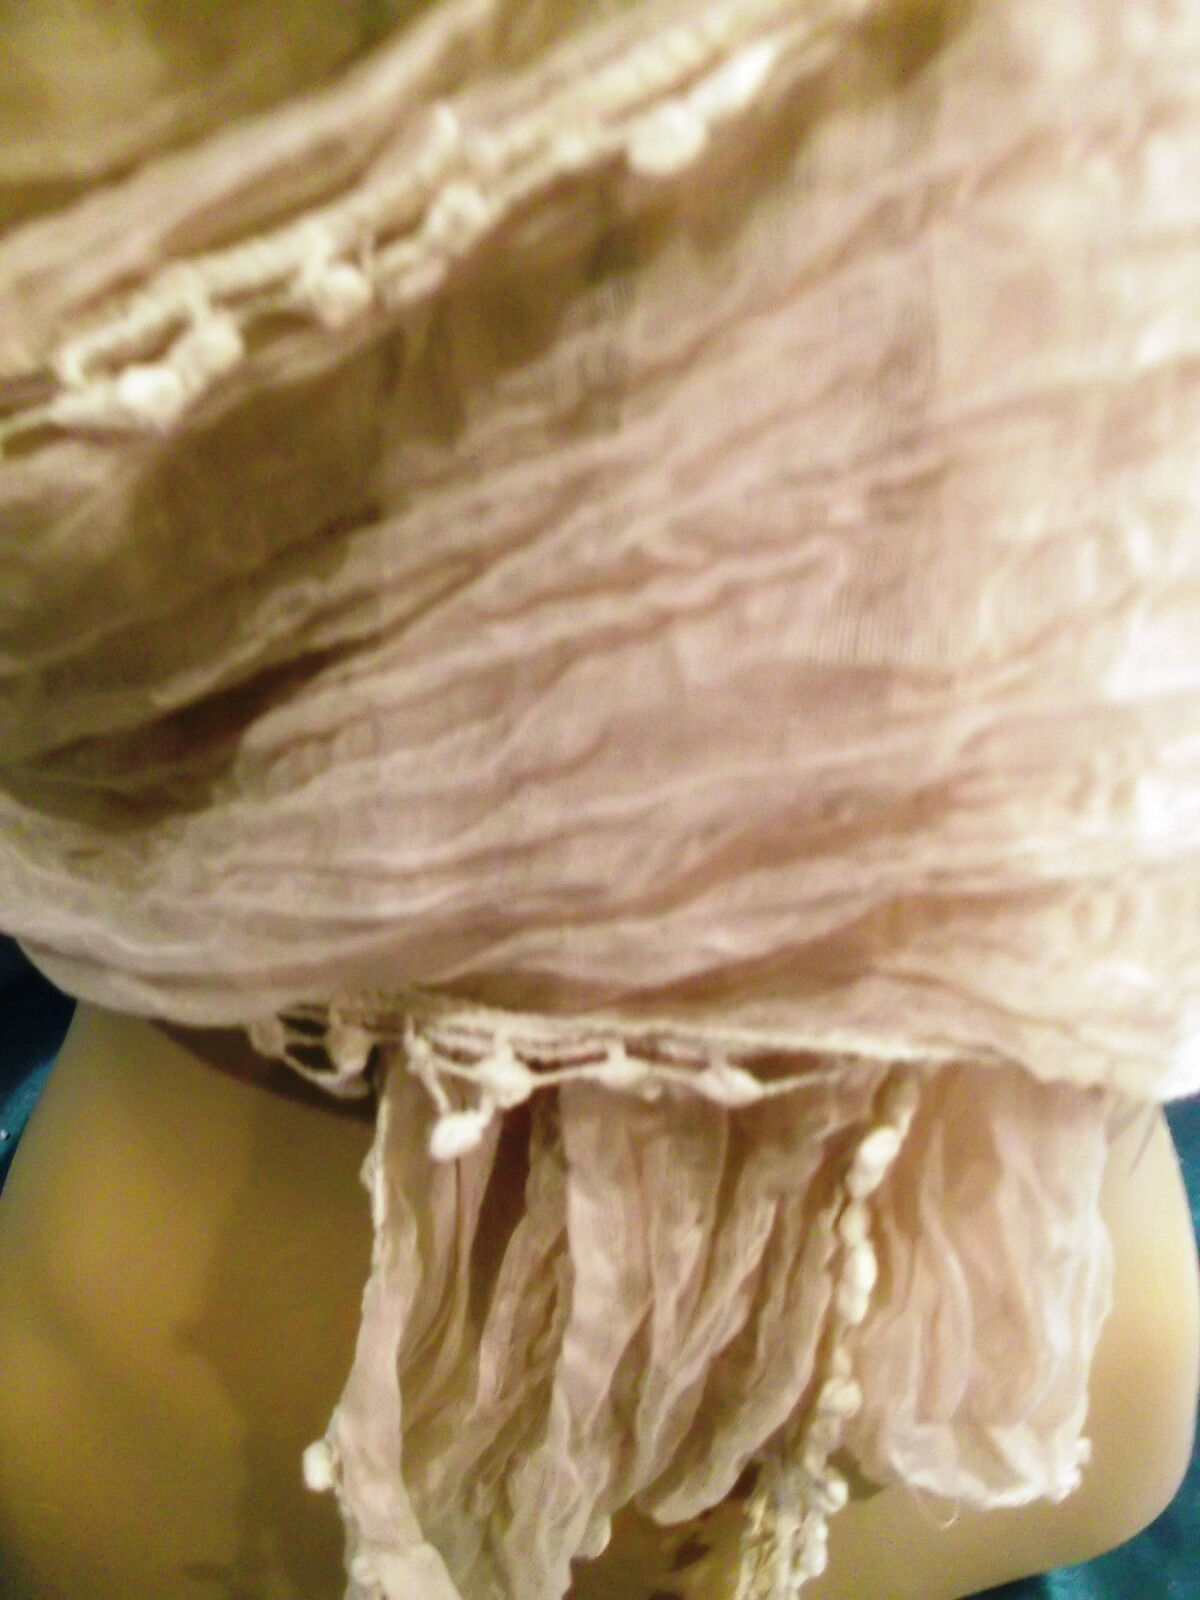 gorgeous cream handmade shawl-bobble edge,triangular.17"widex70"long,fine muslin WonkeyDonkeyBazaar